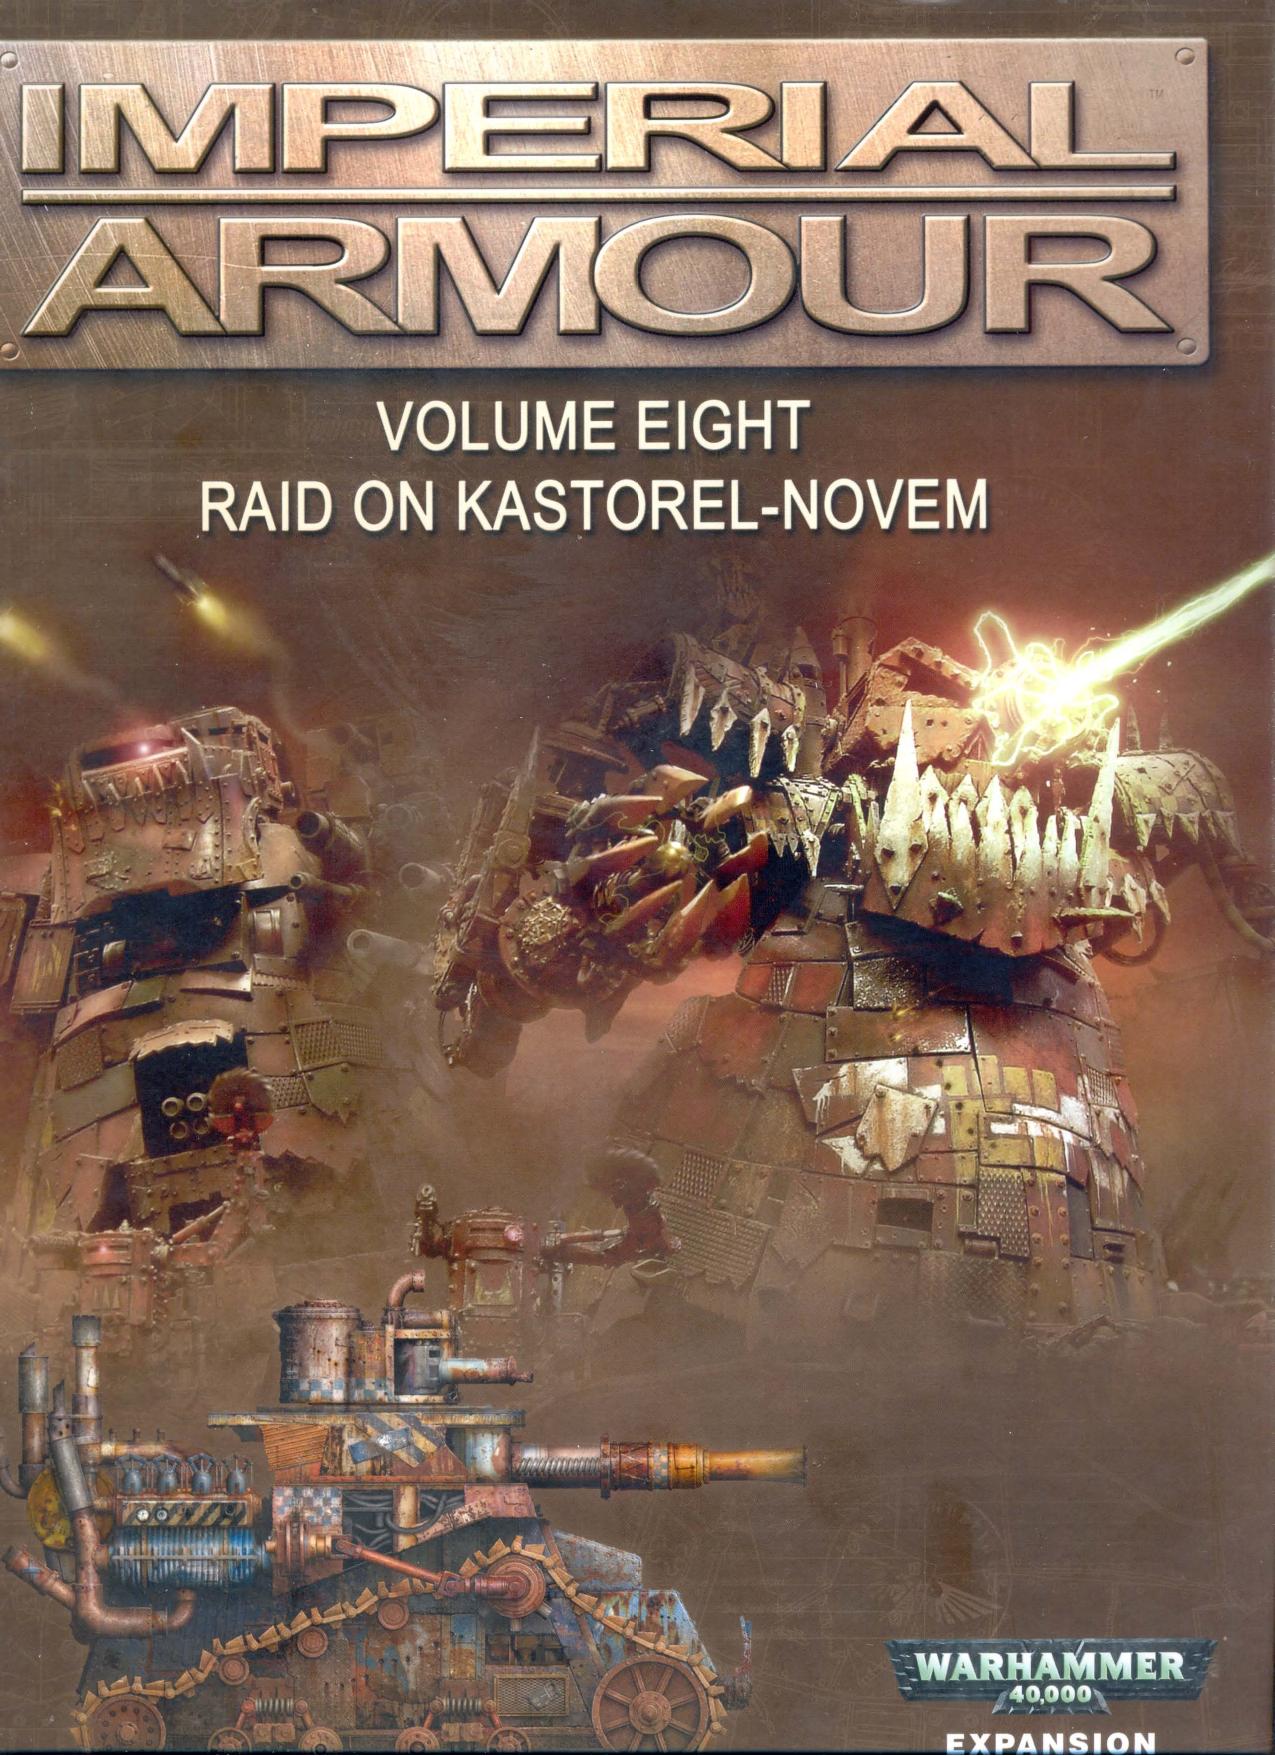 Imperial Armour Vol 8 Raid on Kastorel-Novem